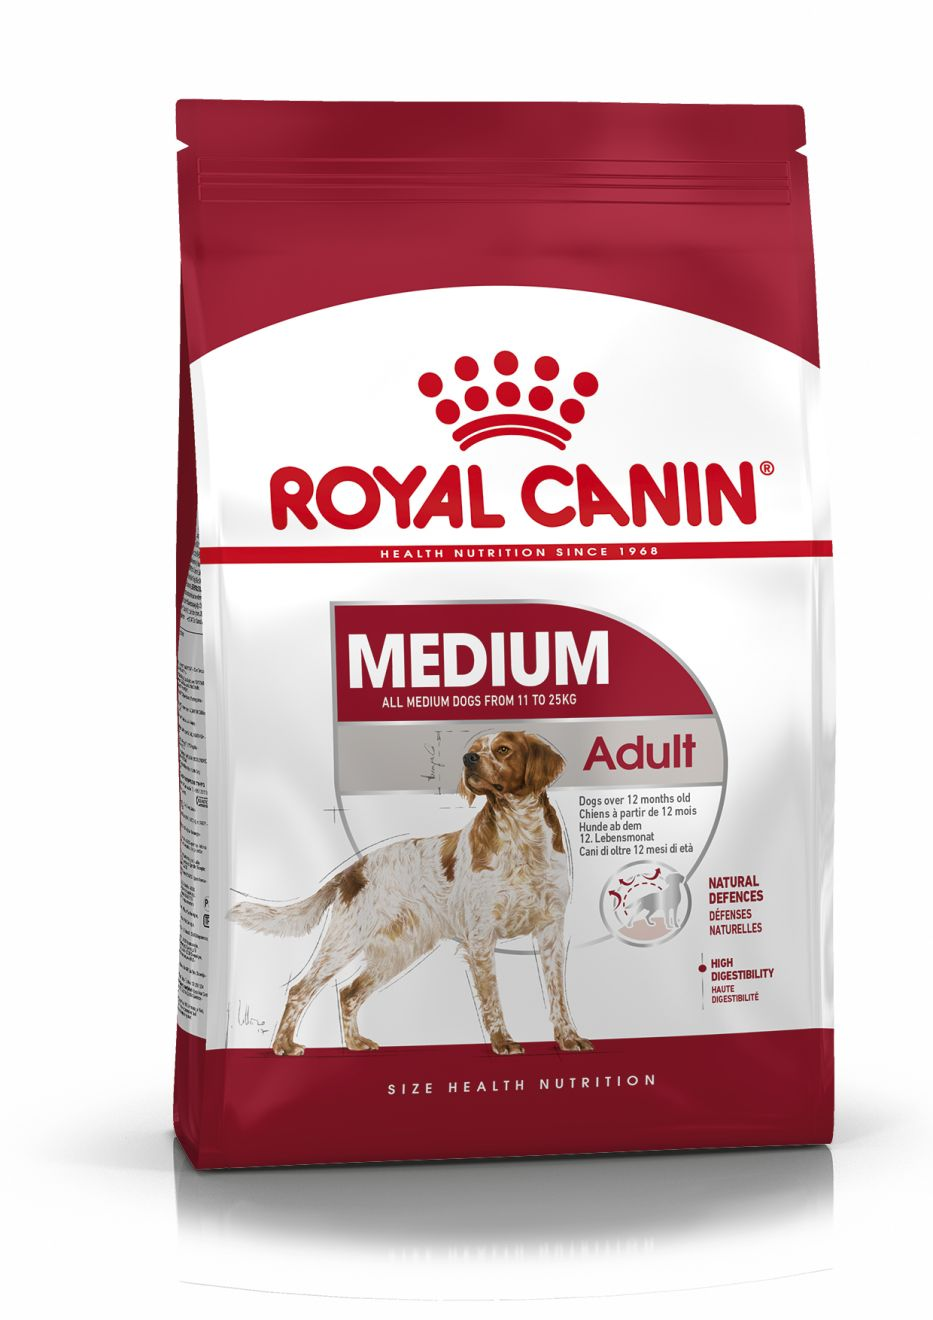 Medium Adult Dry - Royal Canin